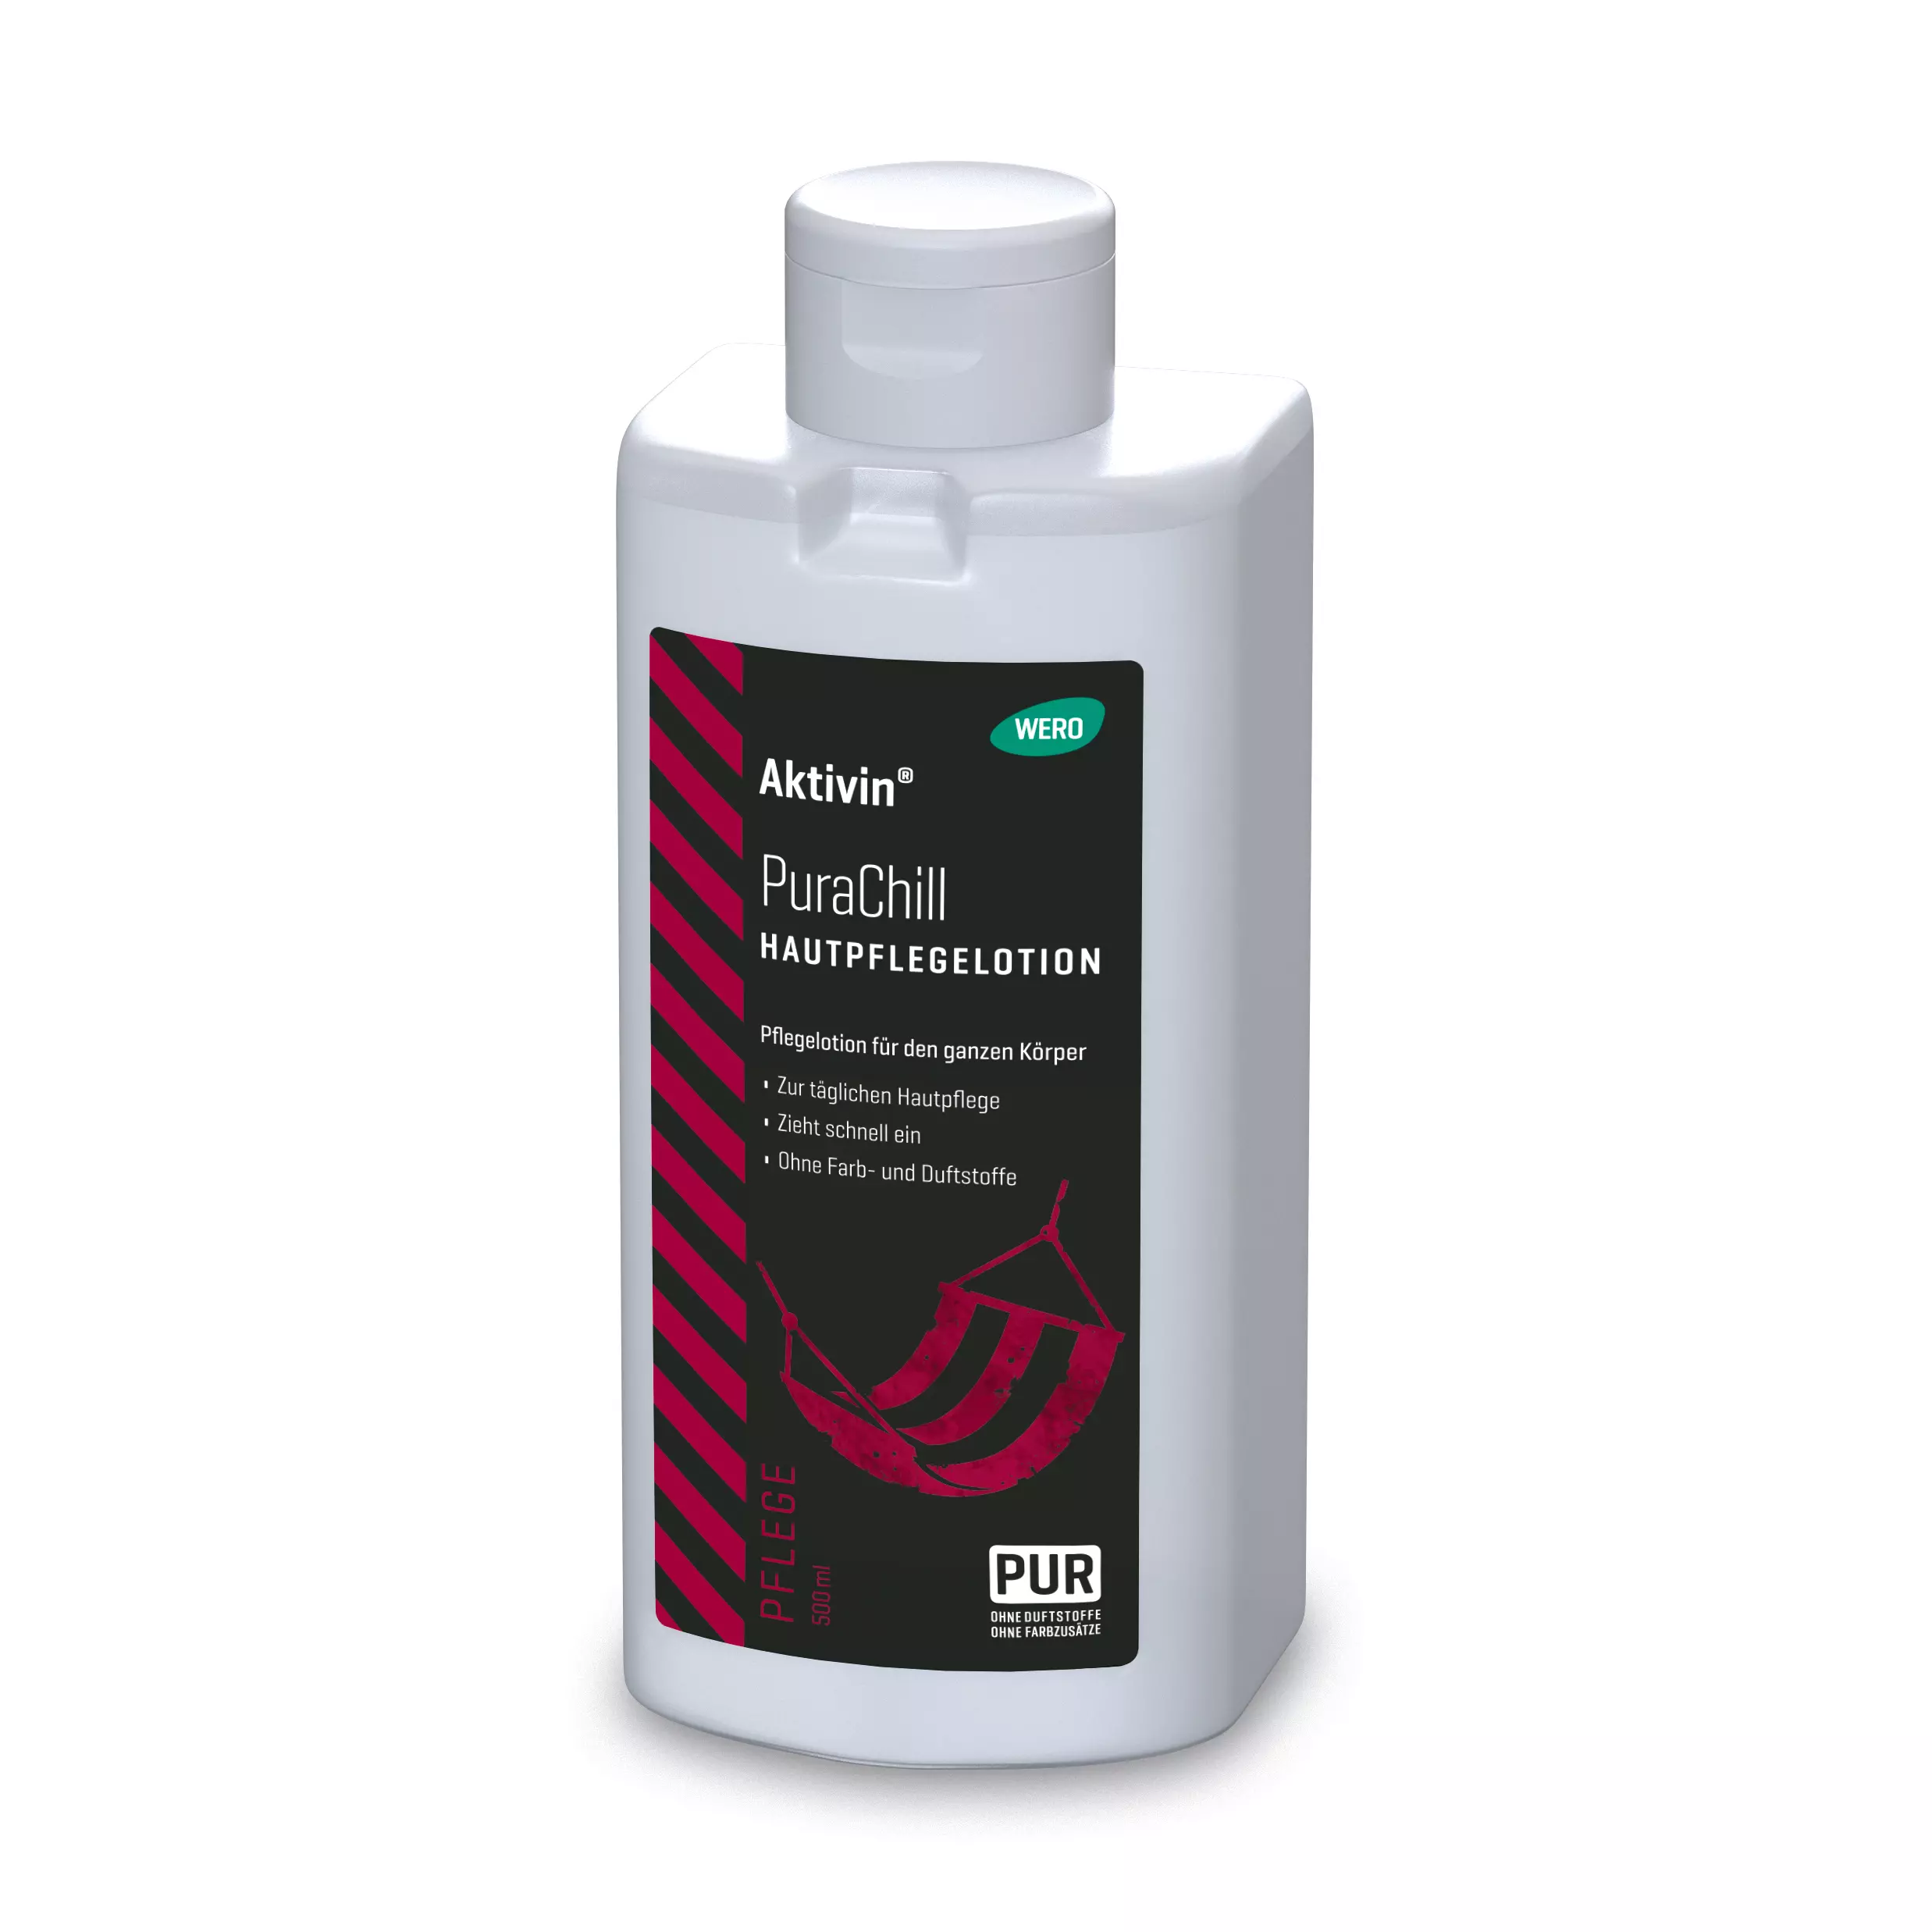 Hautpflegelotion Aktivin® PuraChill - 500 ml